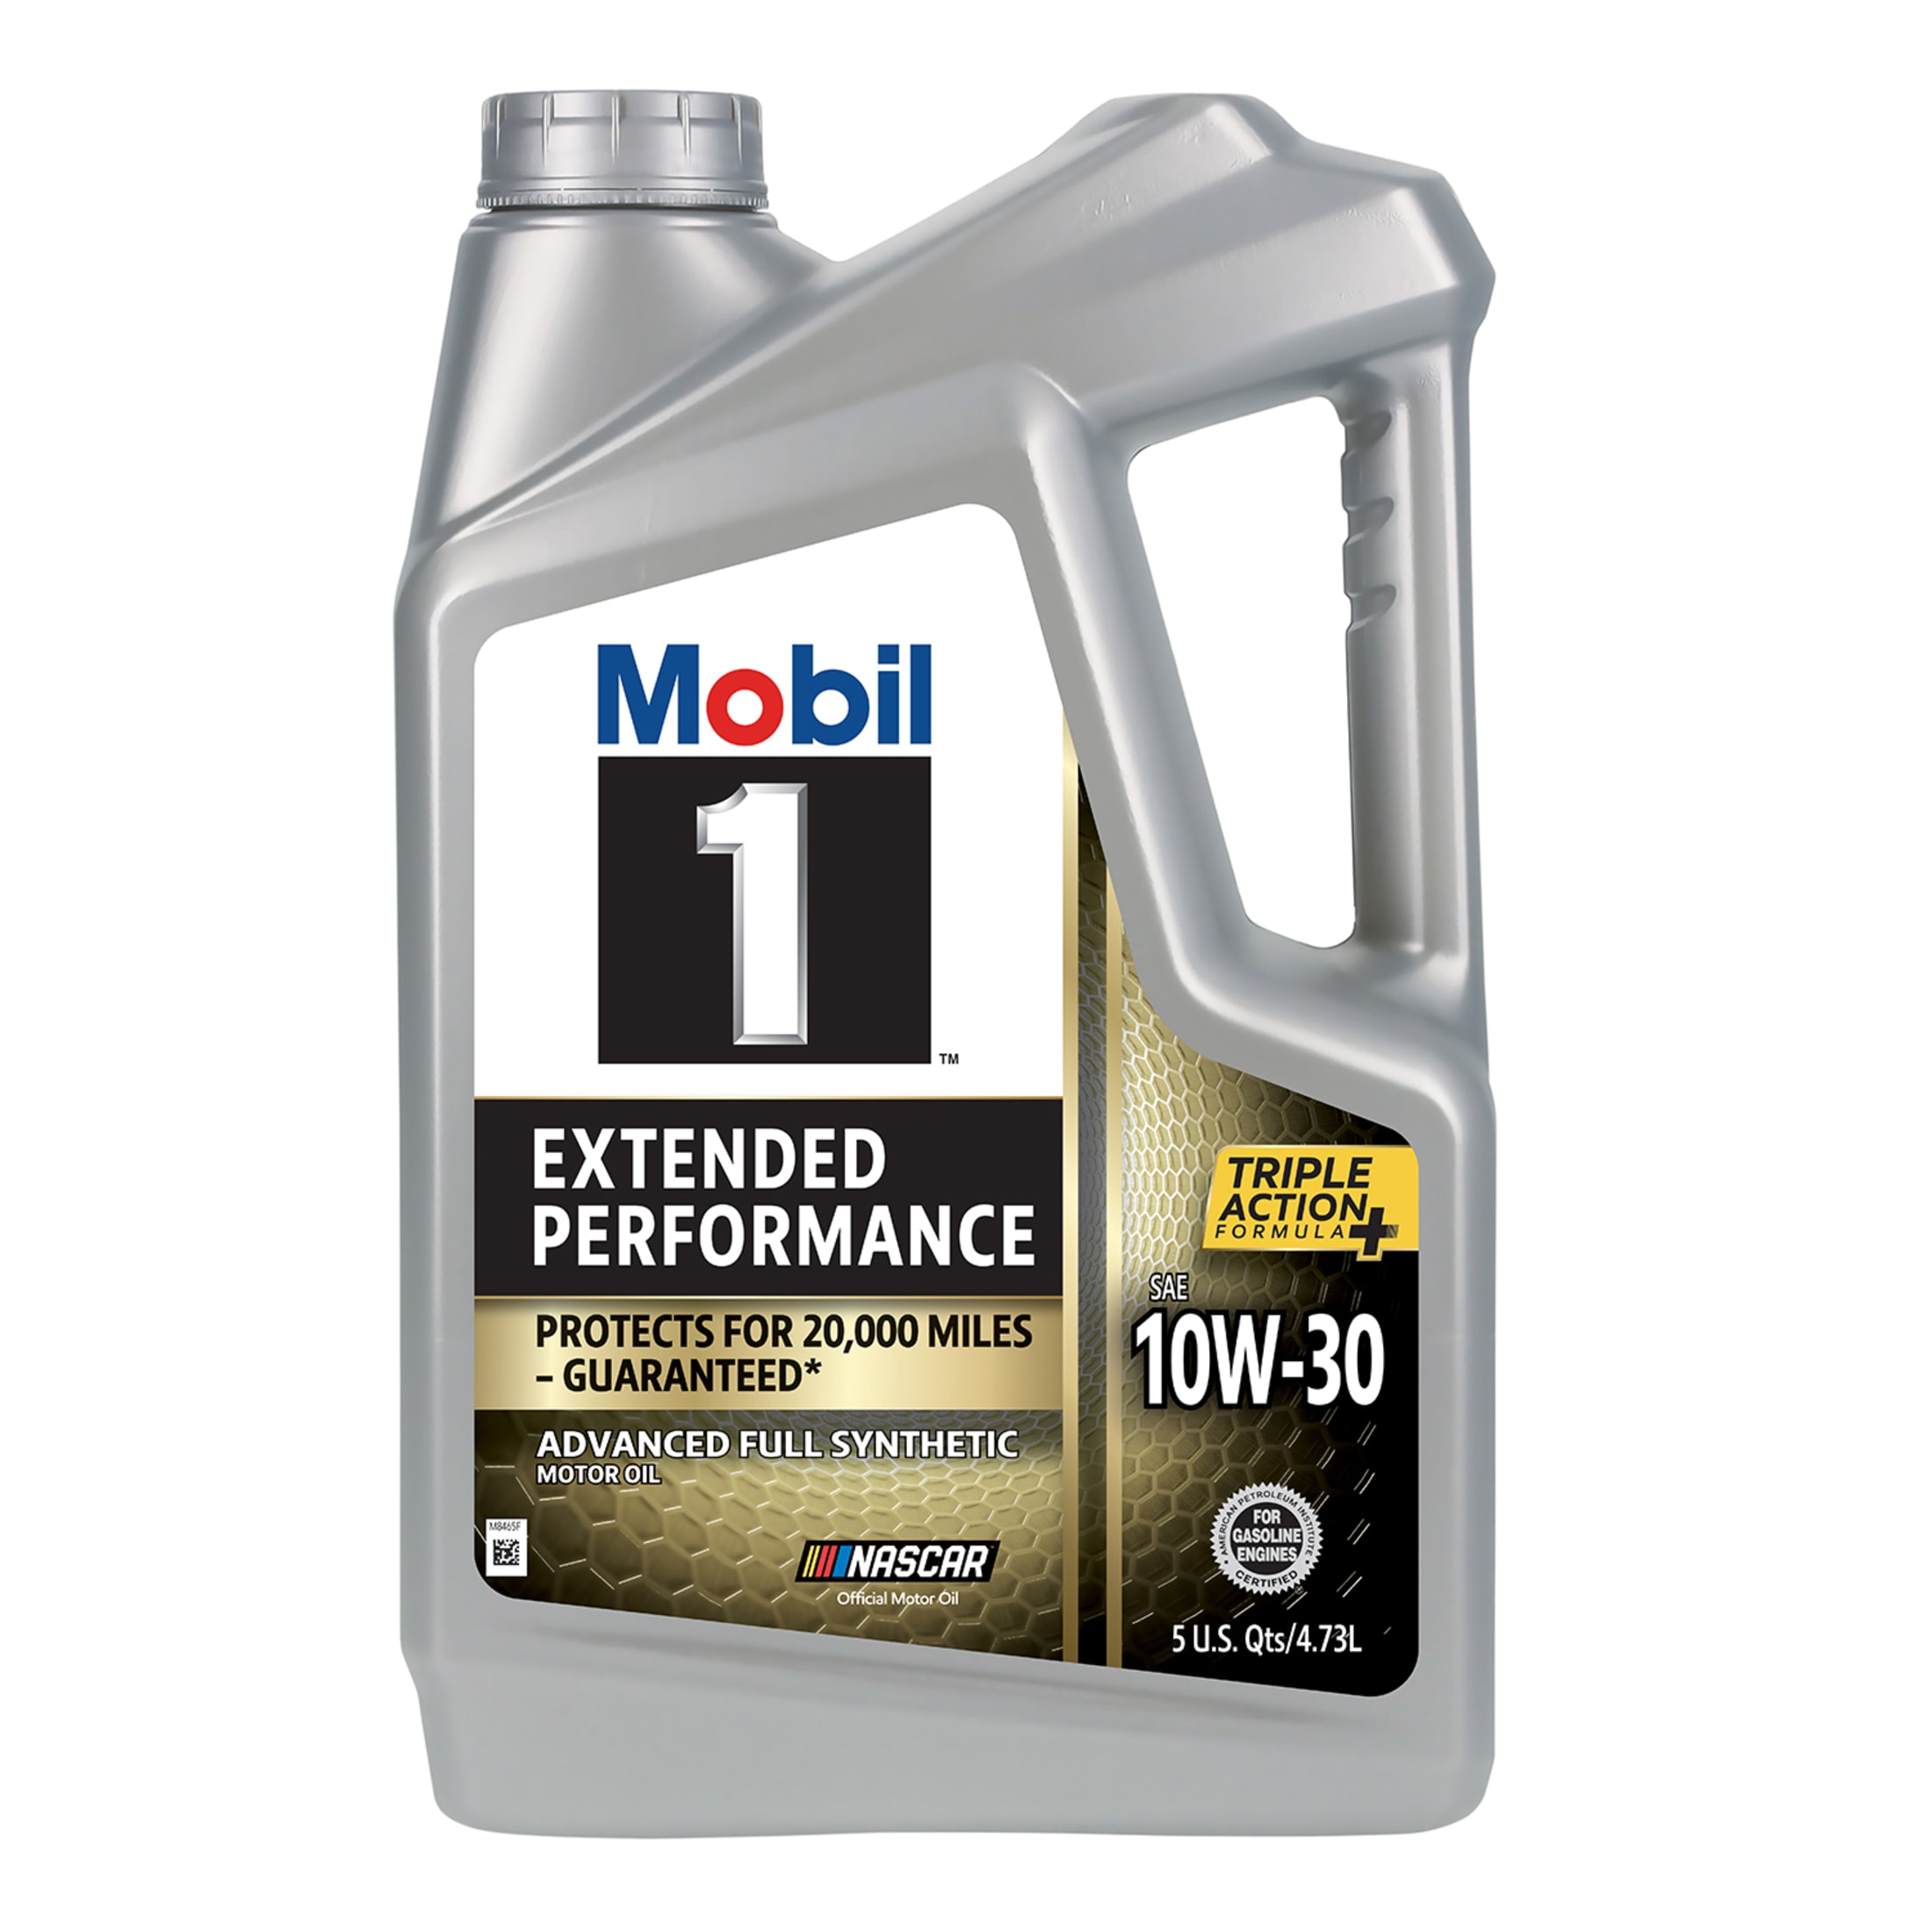 Mobil 1 Extended Performance Full Synthetic Motor Oil 10W-30, 5 Quart - image 1 of 8